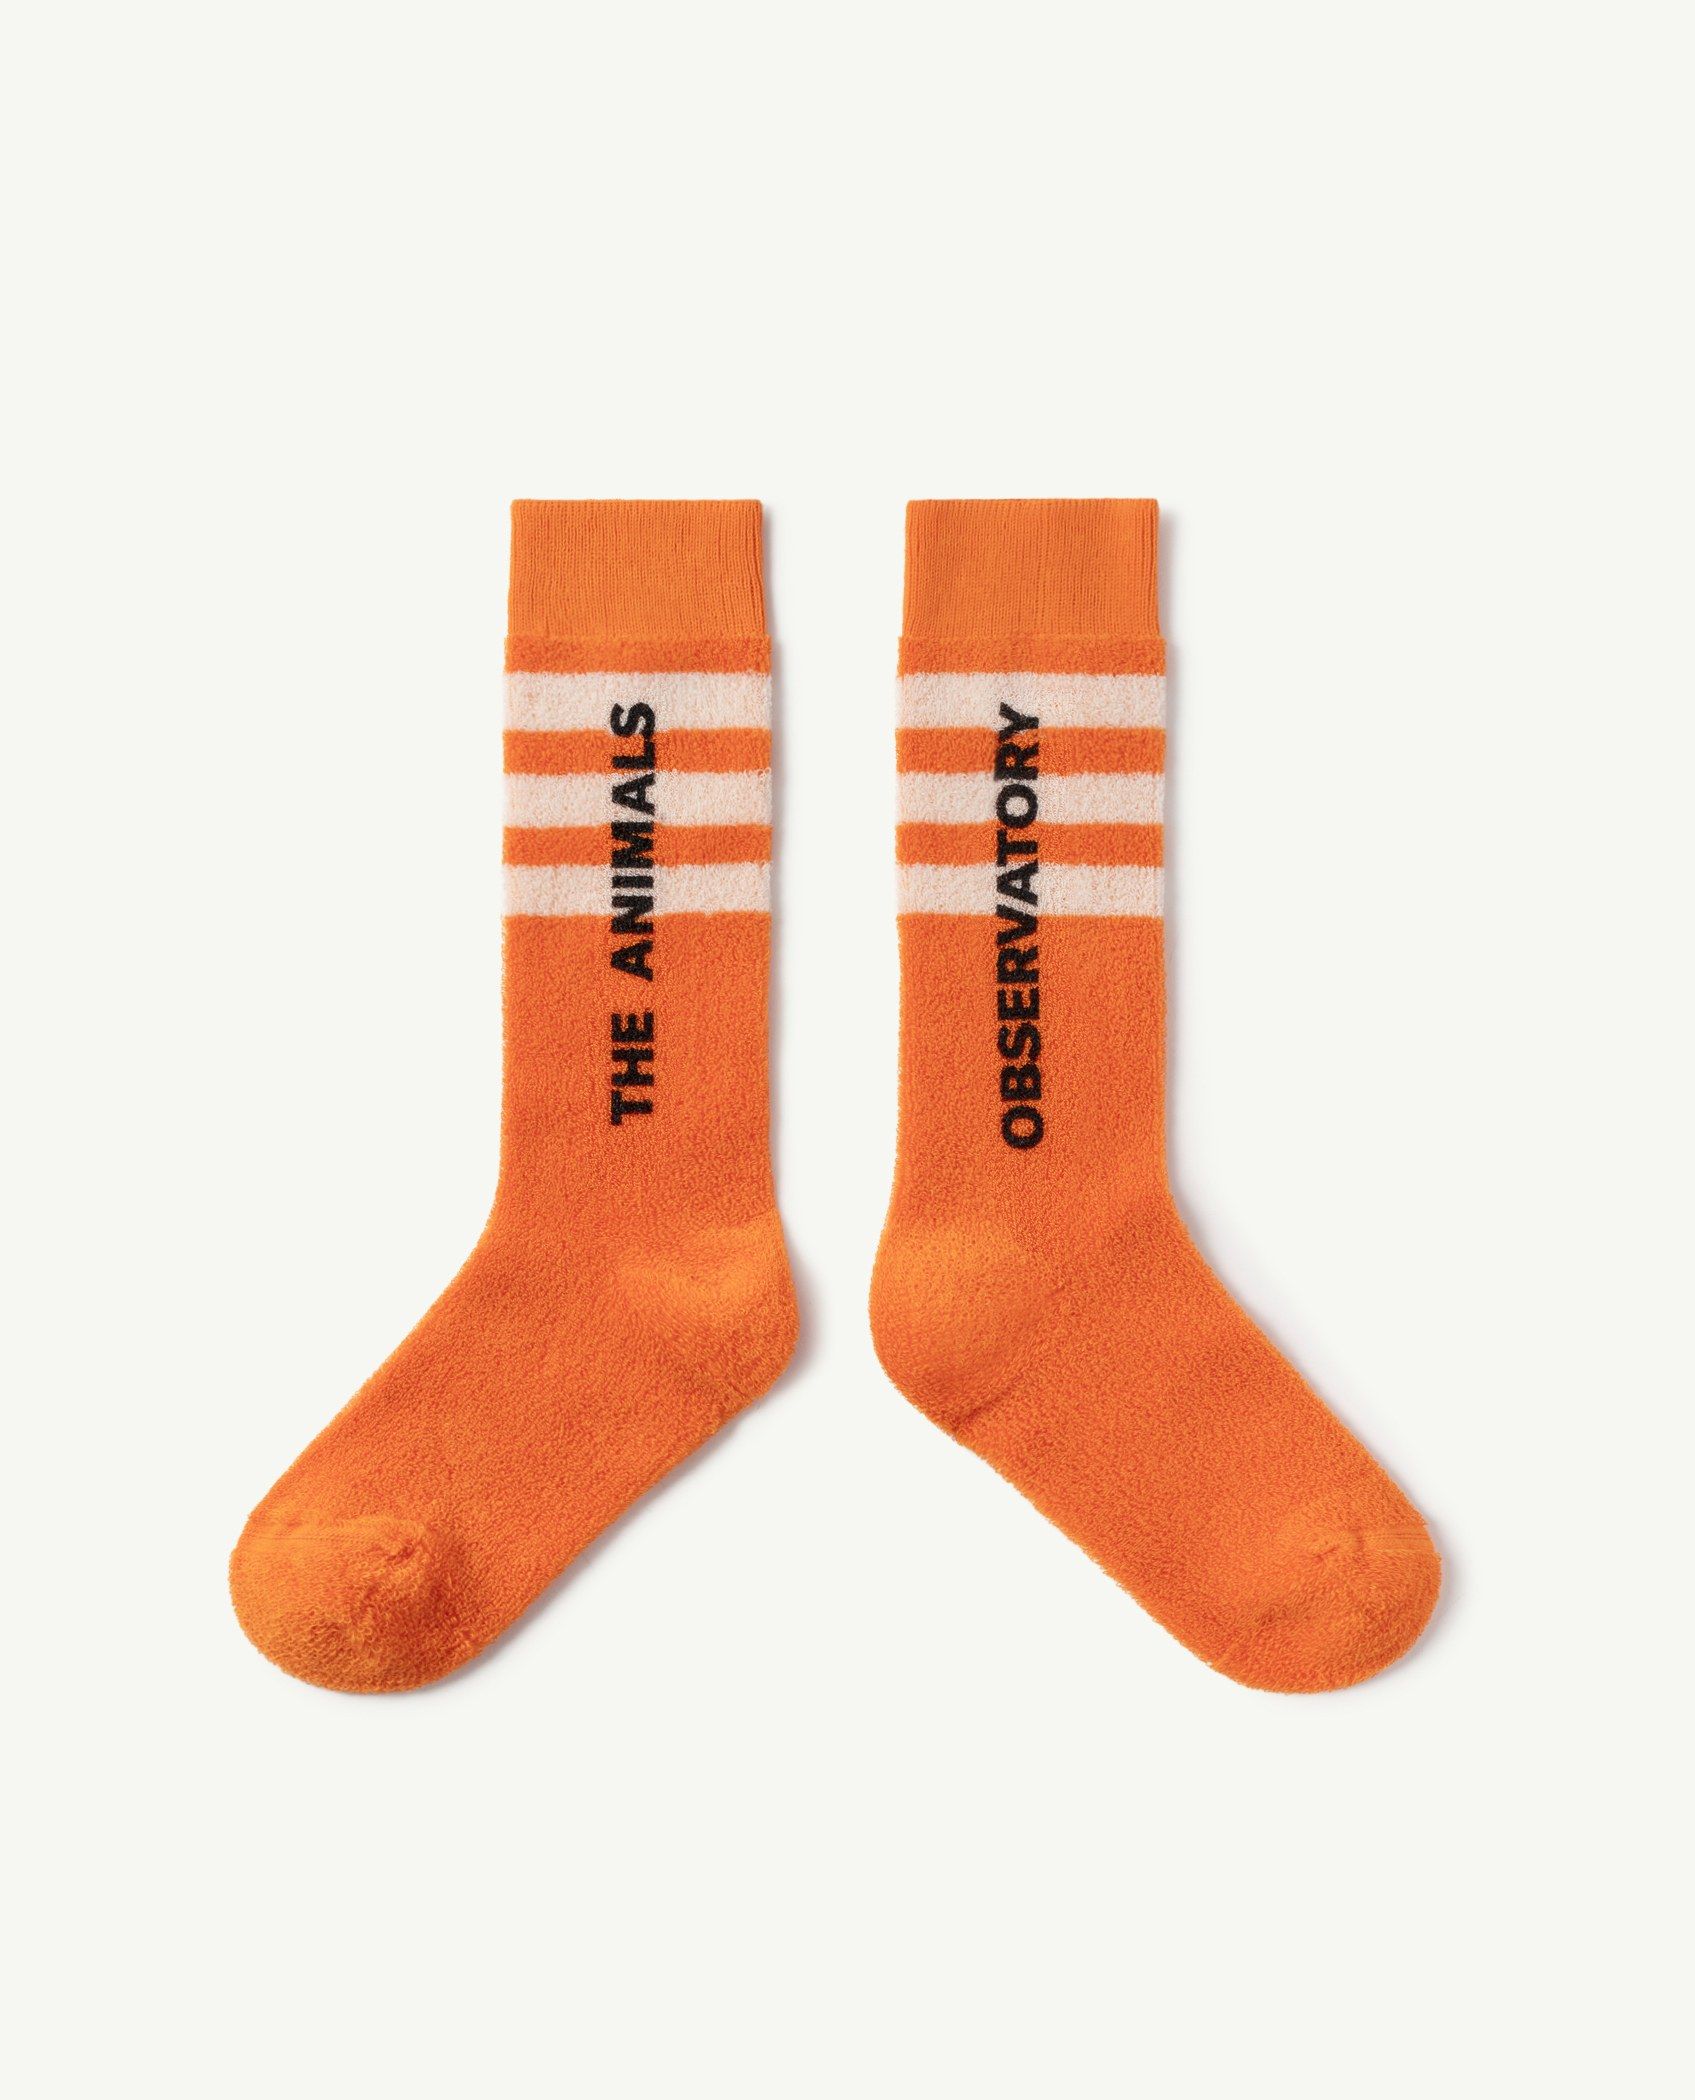 Boys & Girls Orange Cotton Socks